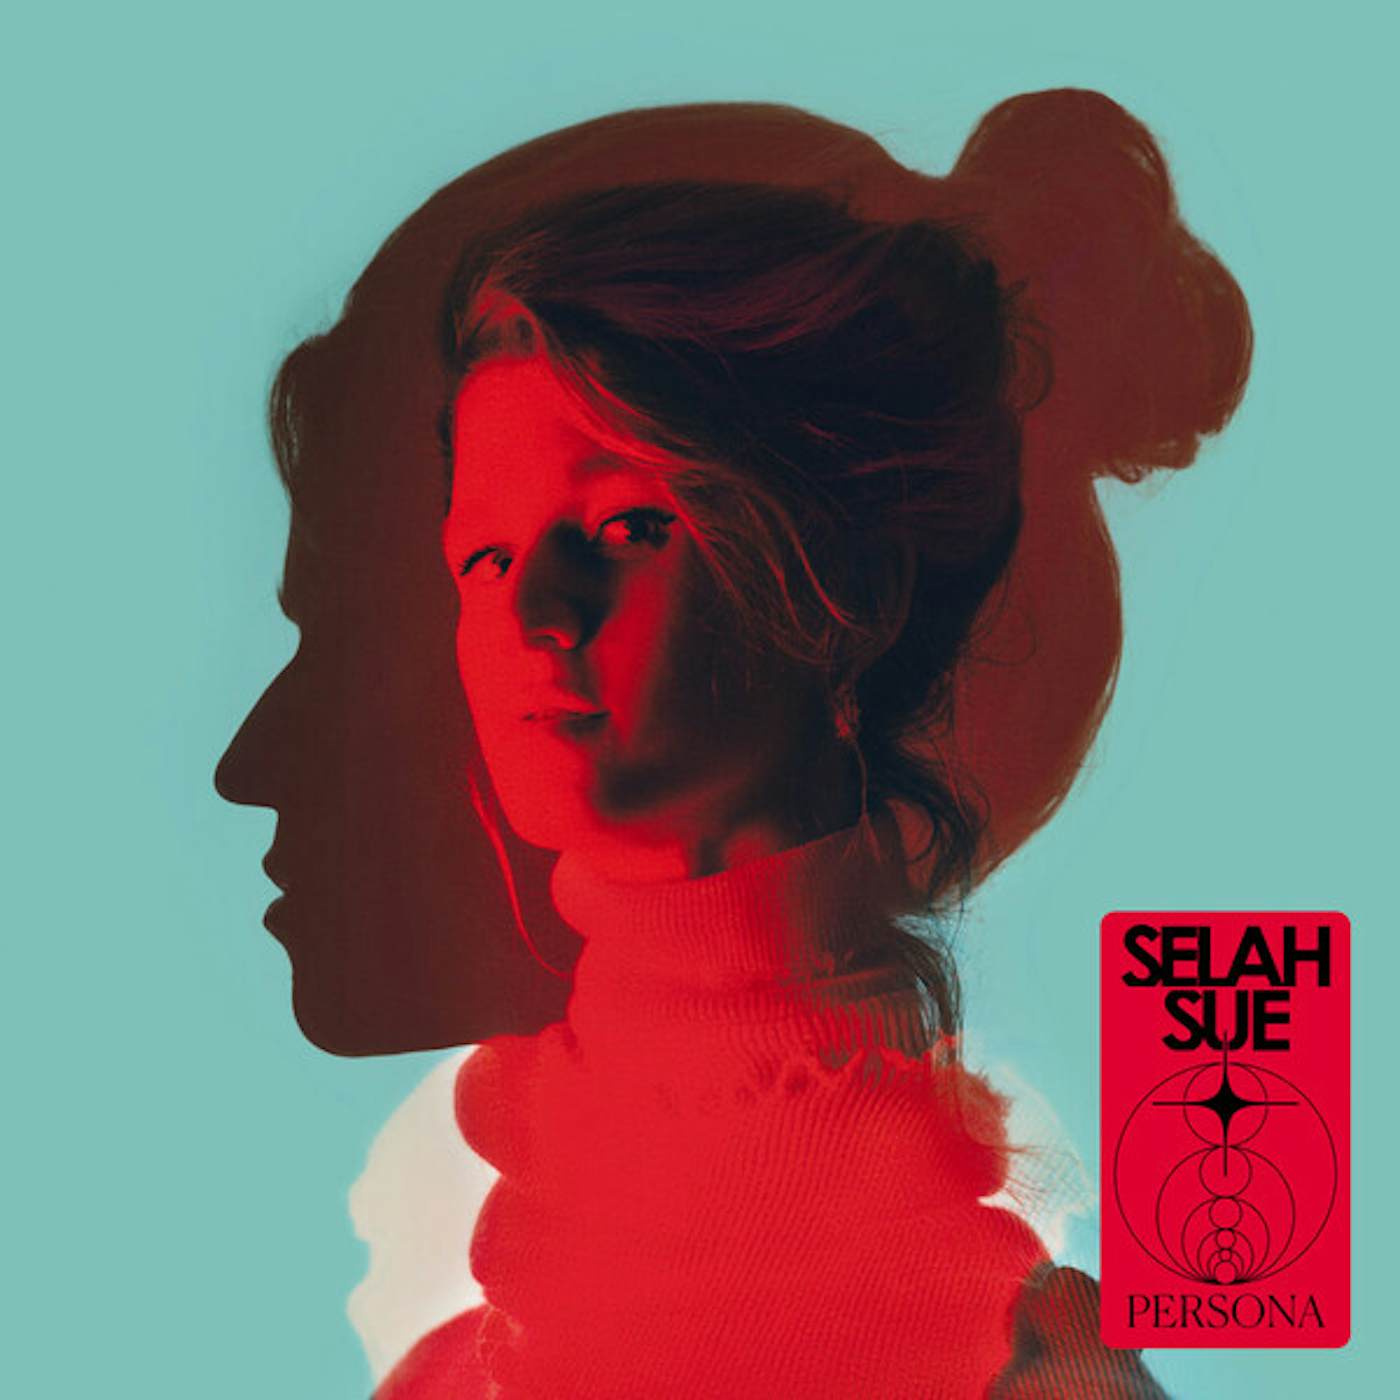 Selah Sue Persona Vinyl Record